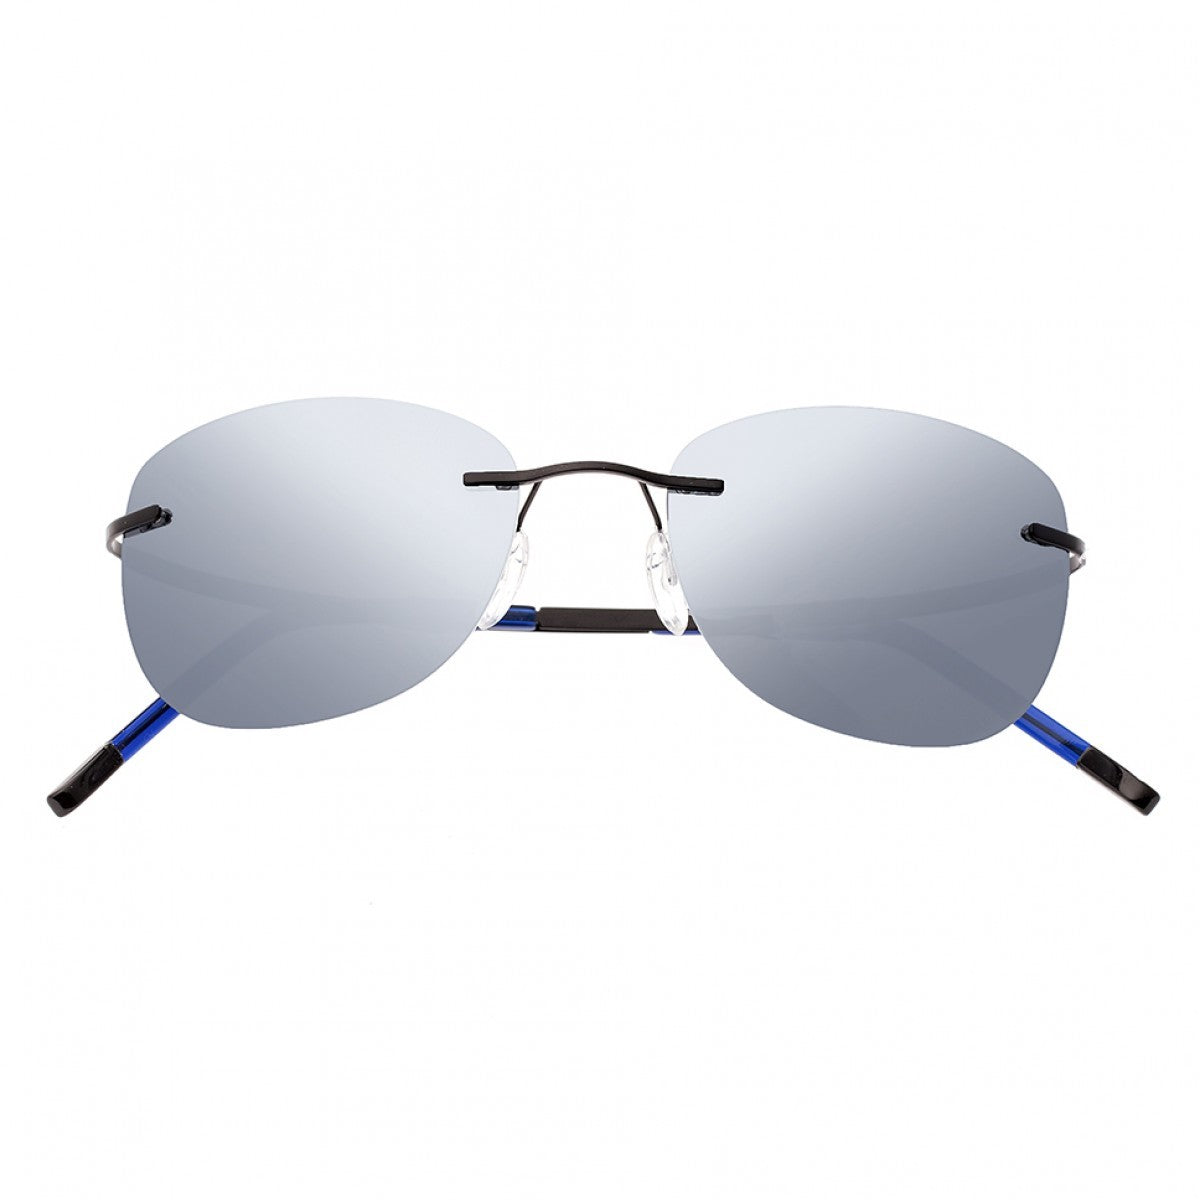 Breed Adhara Polarized Sunglasses - Black/Black - BSG043BK